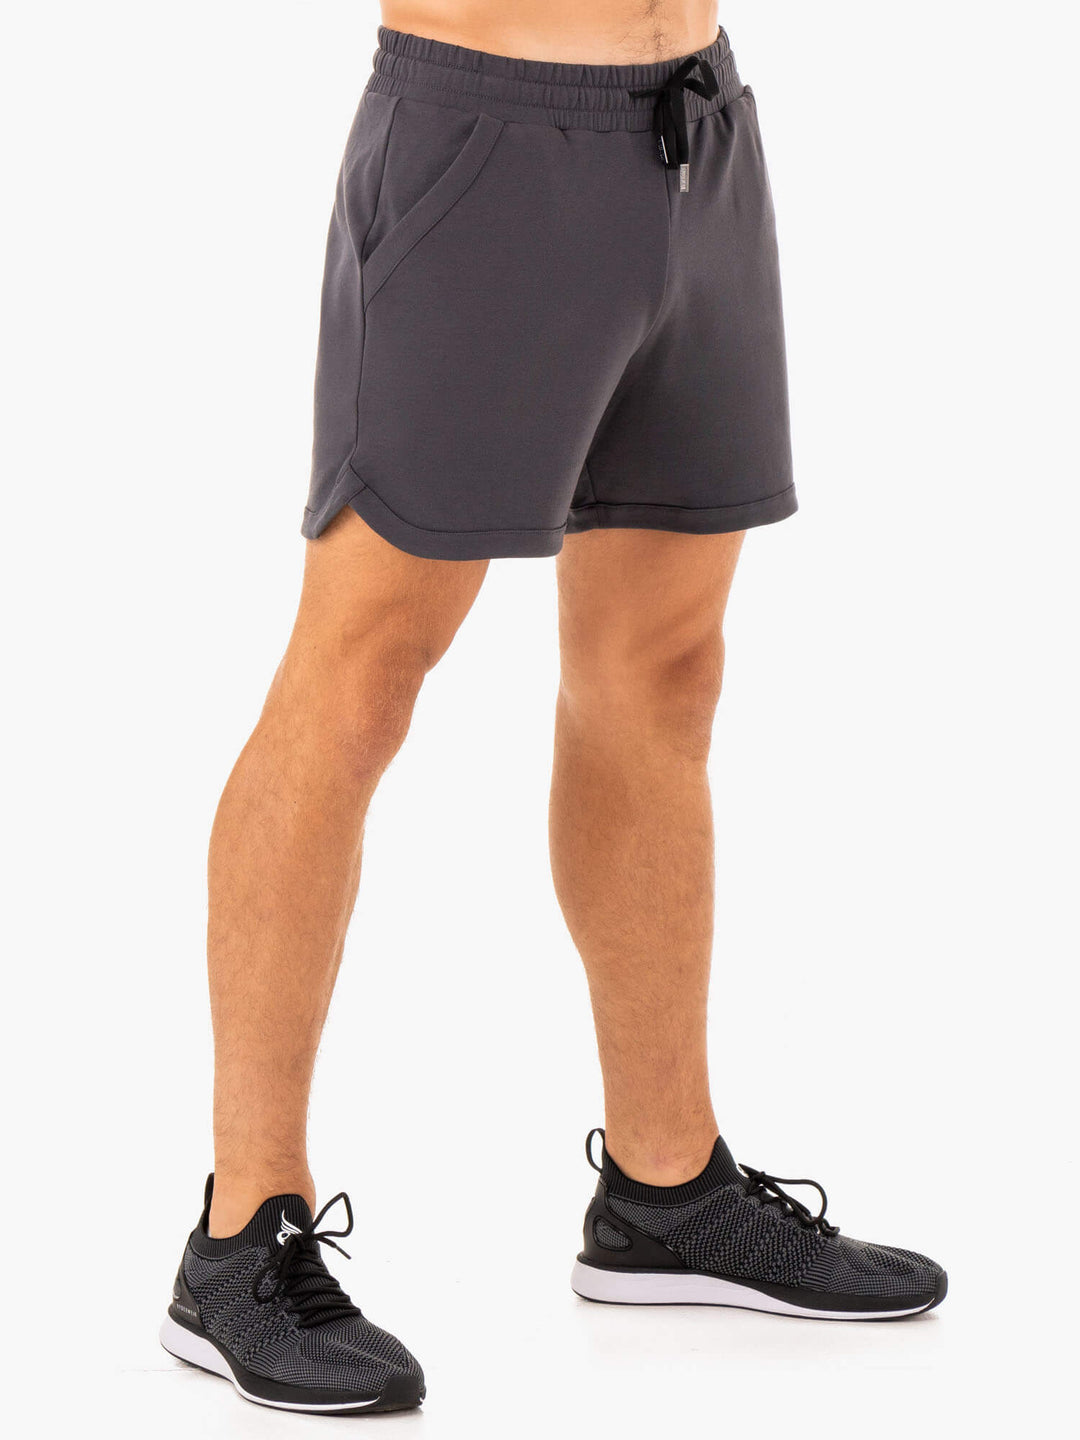 Optimal Gym Short - Charcoal - Ryderwear